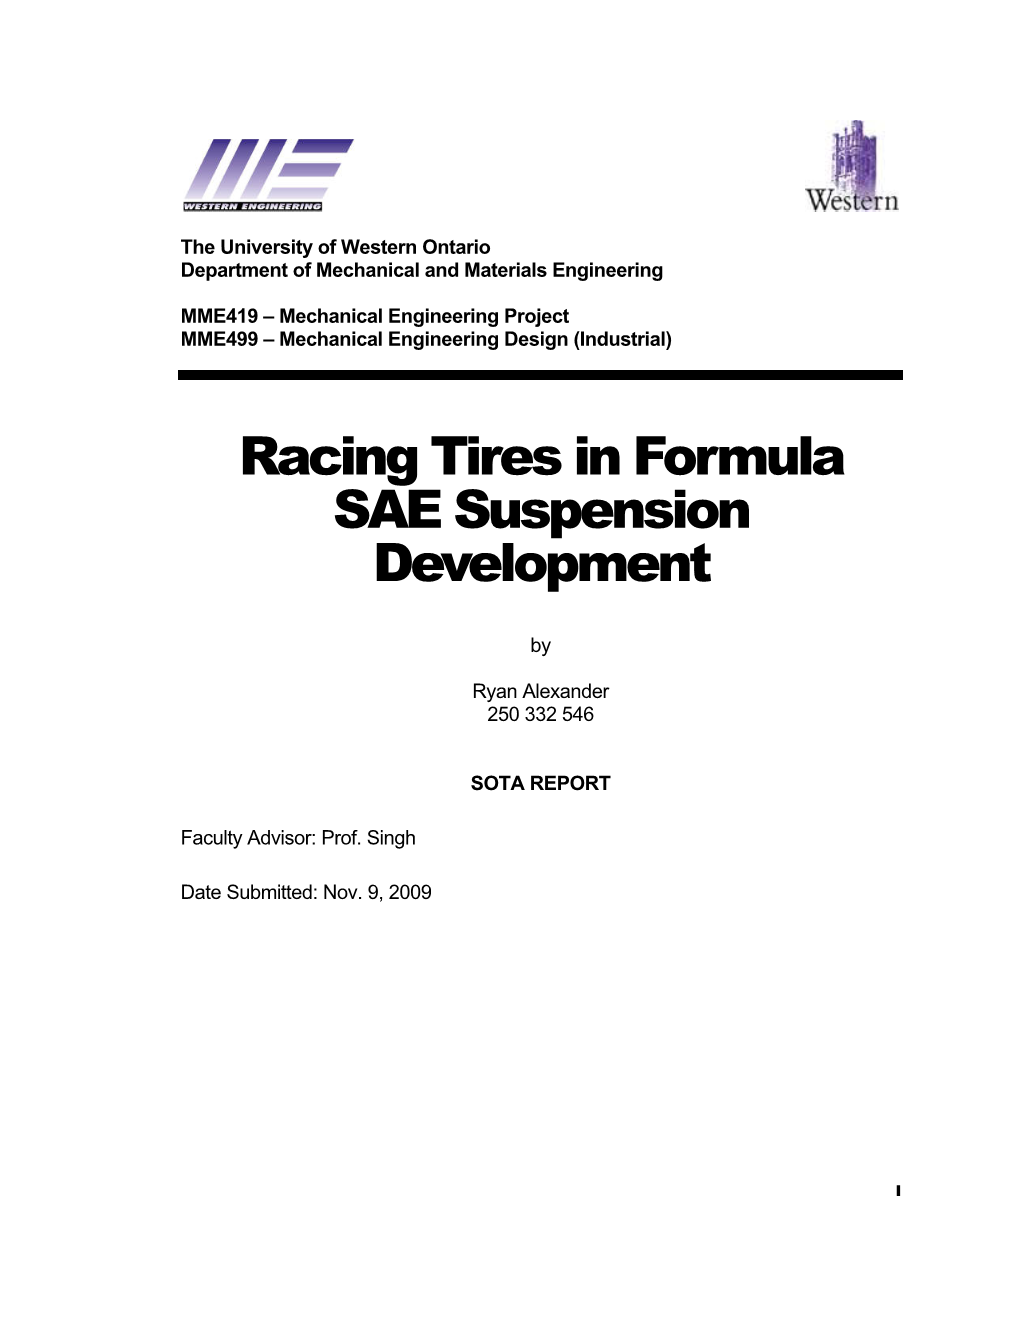 Racing Tires in Formula SAE Suspension Development